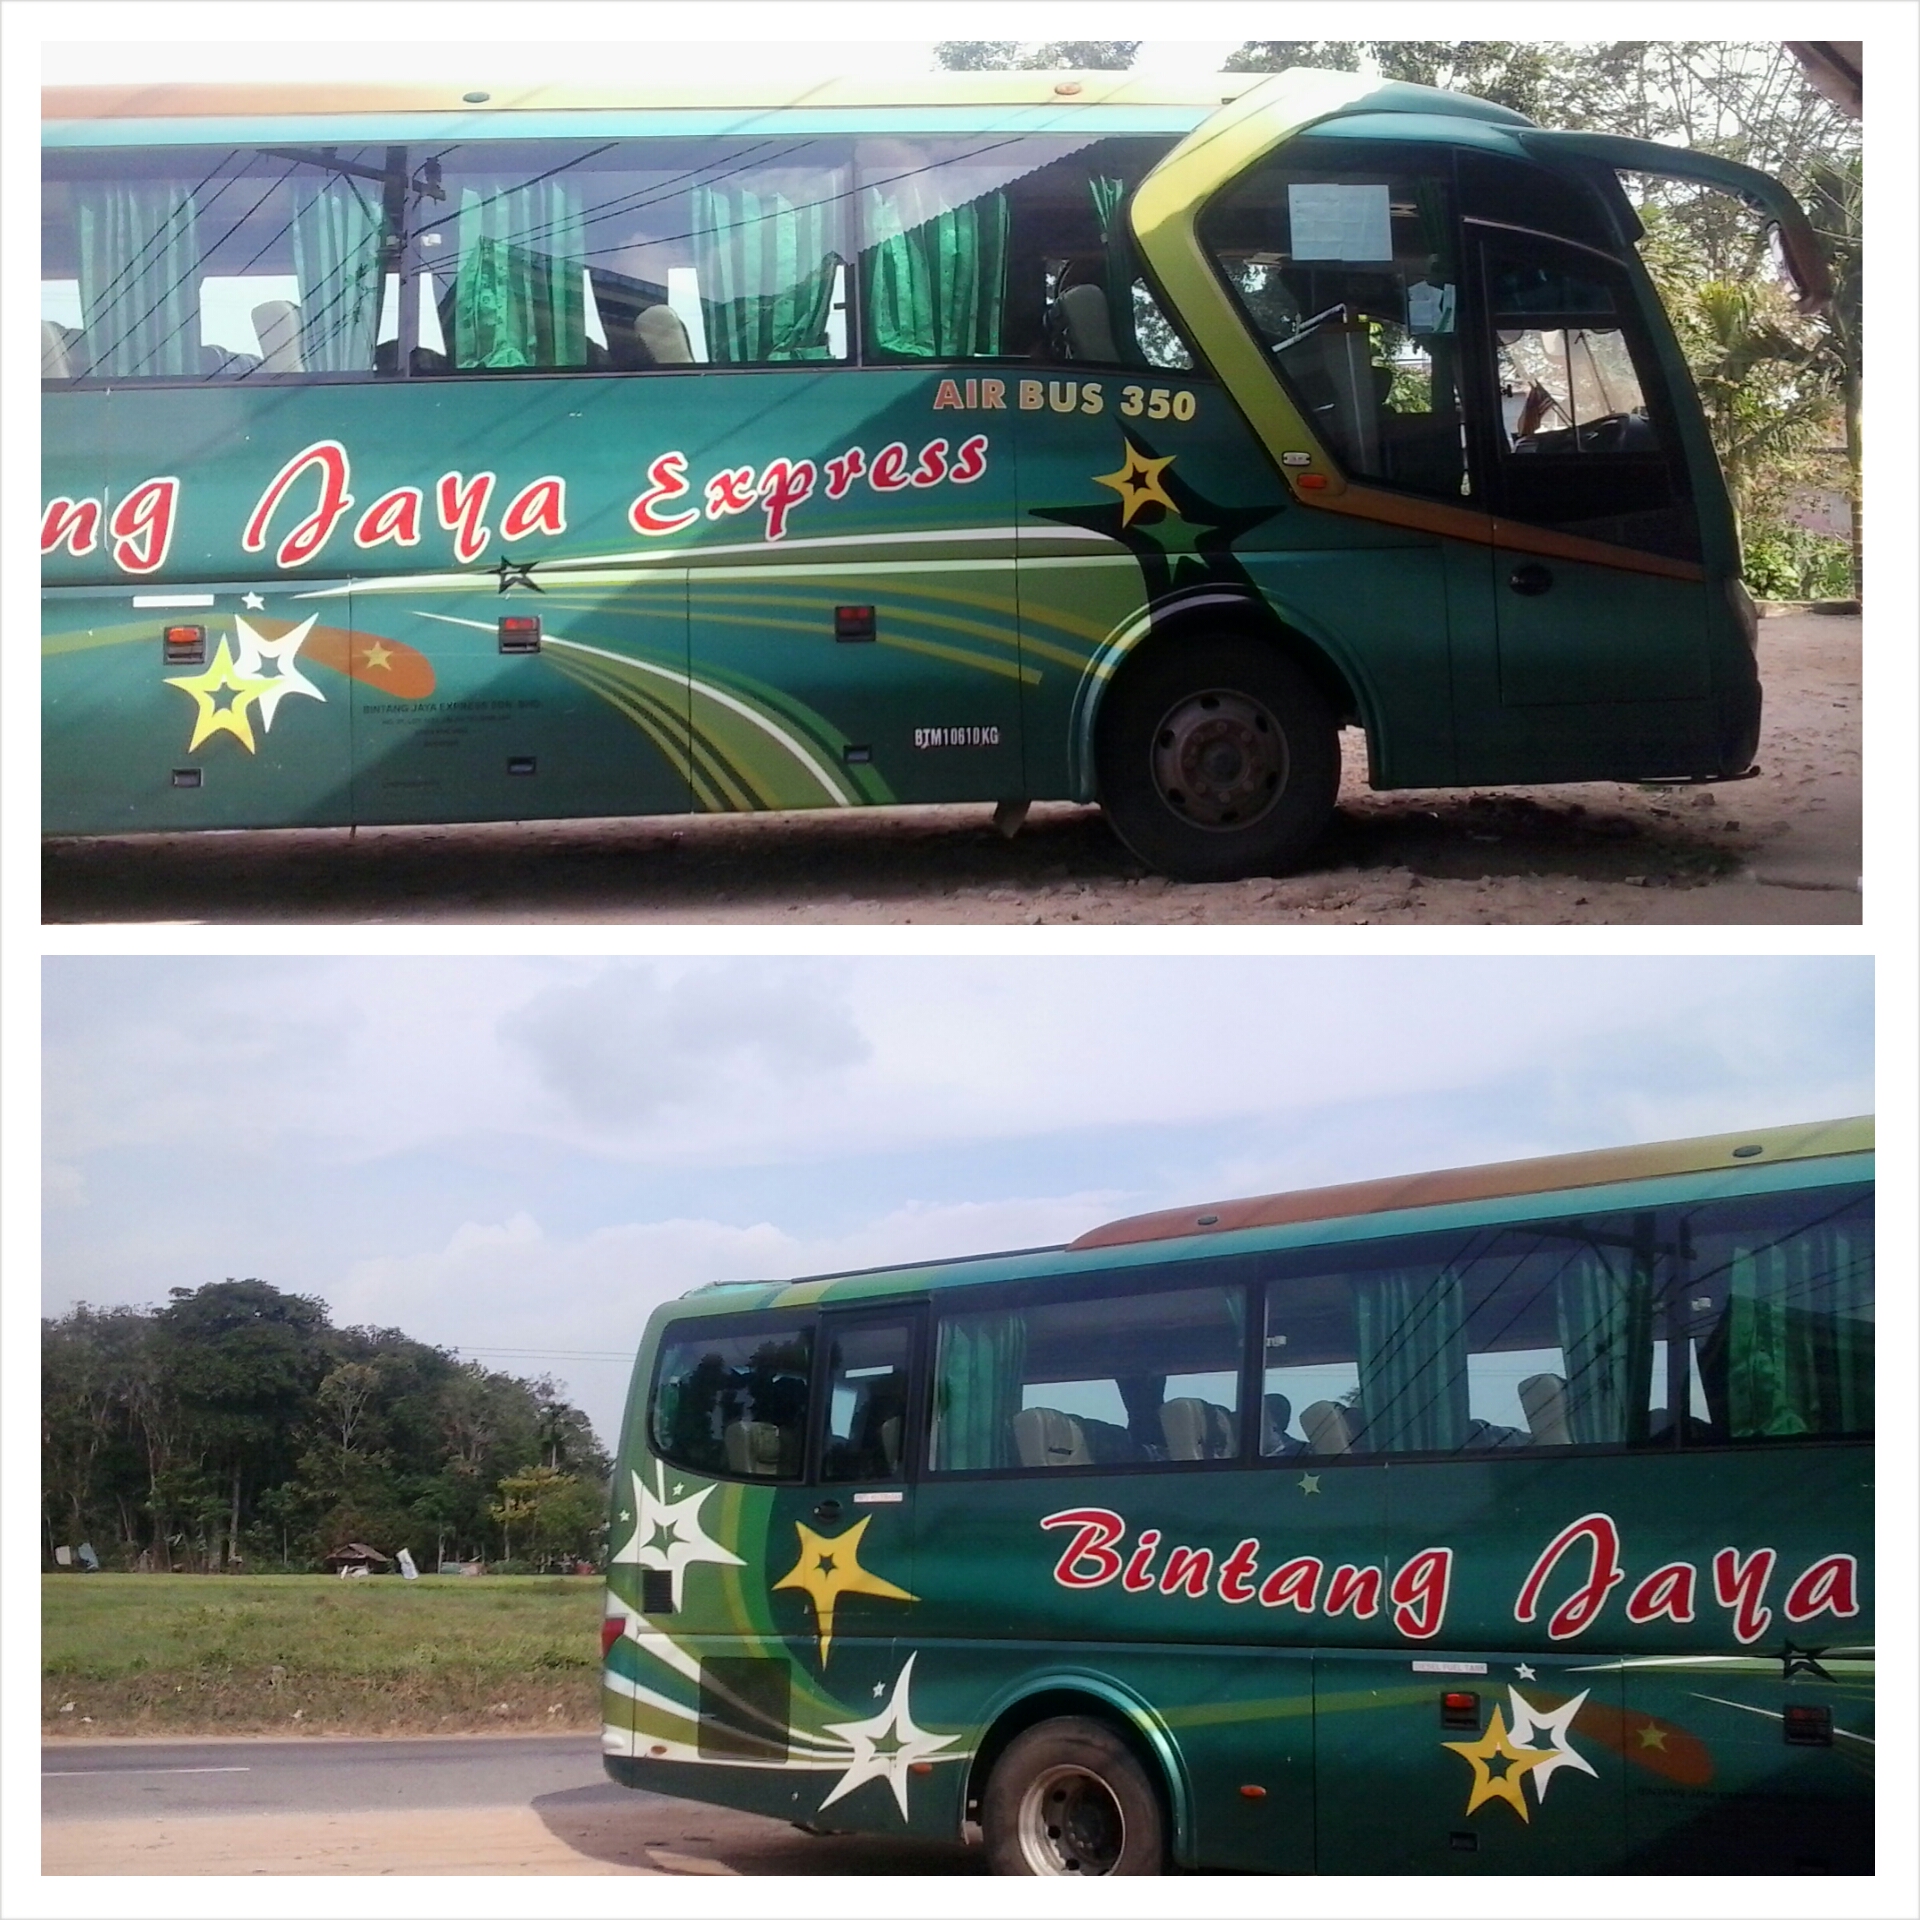 The bus, somewhere in Borneo.